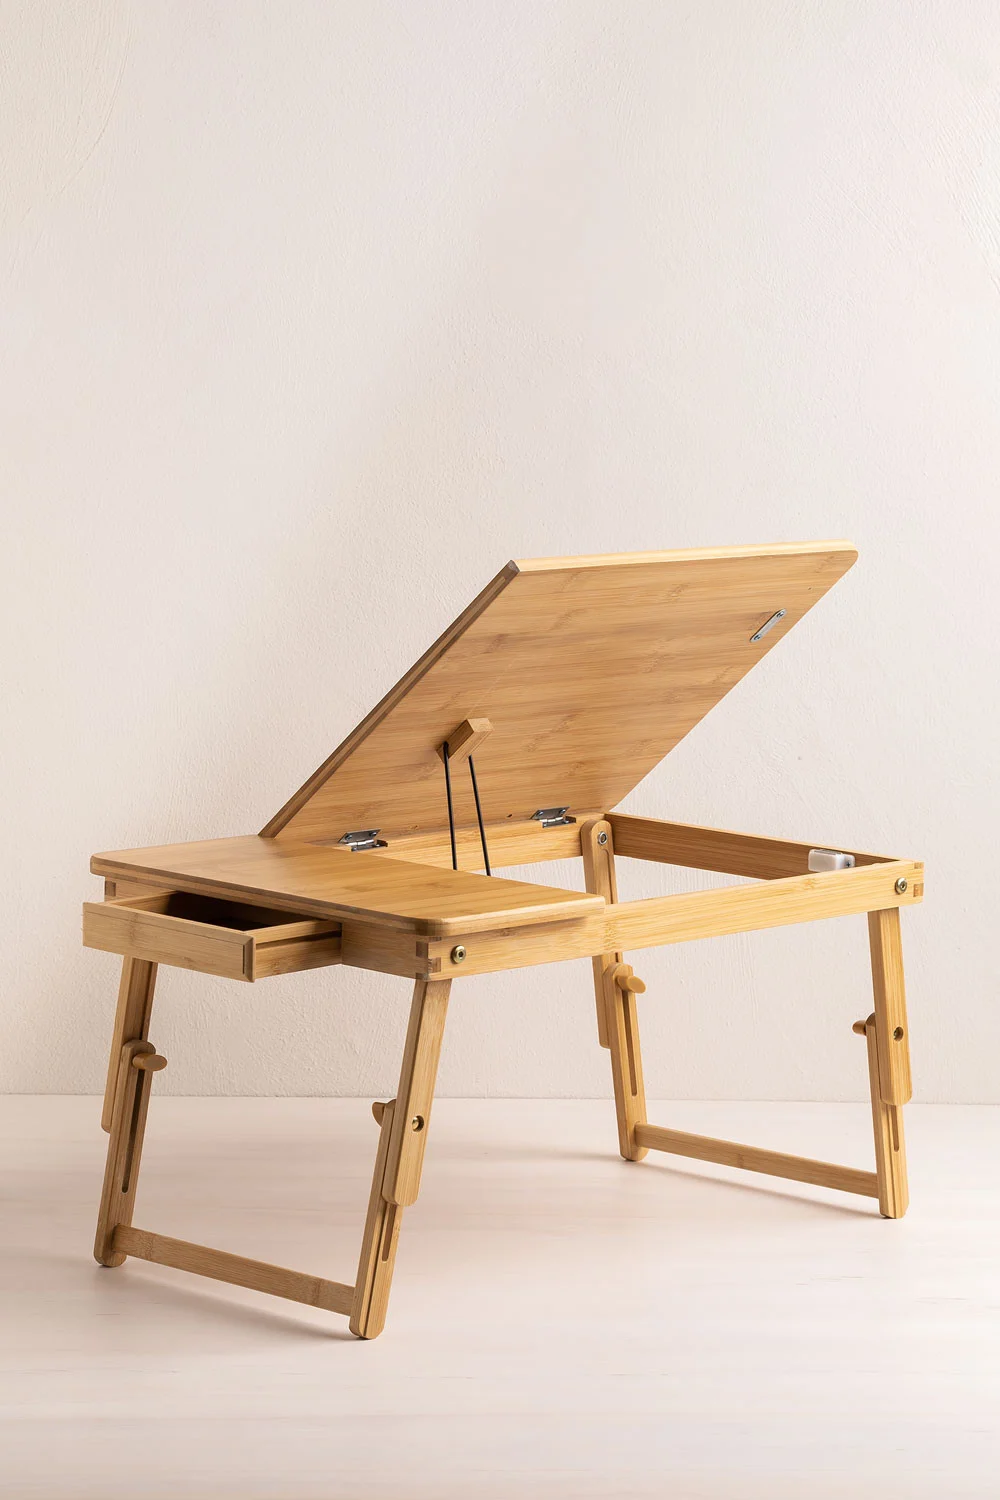 mesa auxiliar plegable para portatil en bambu tecnik 1